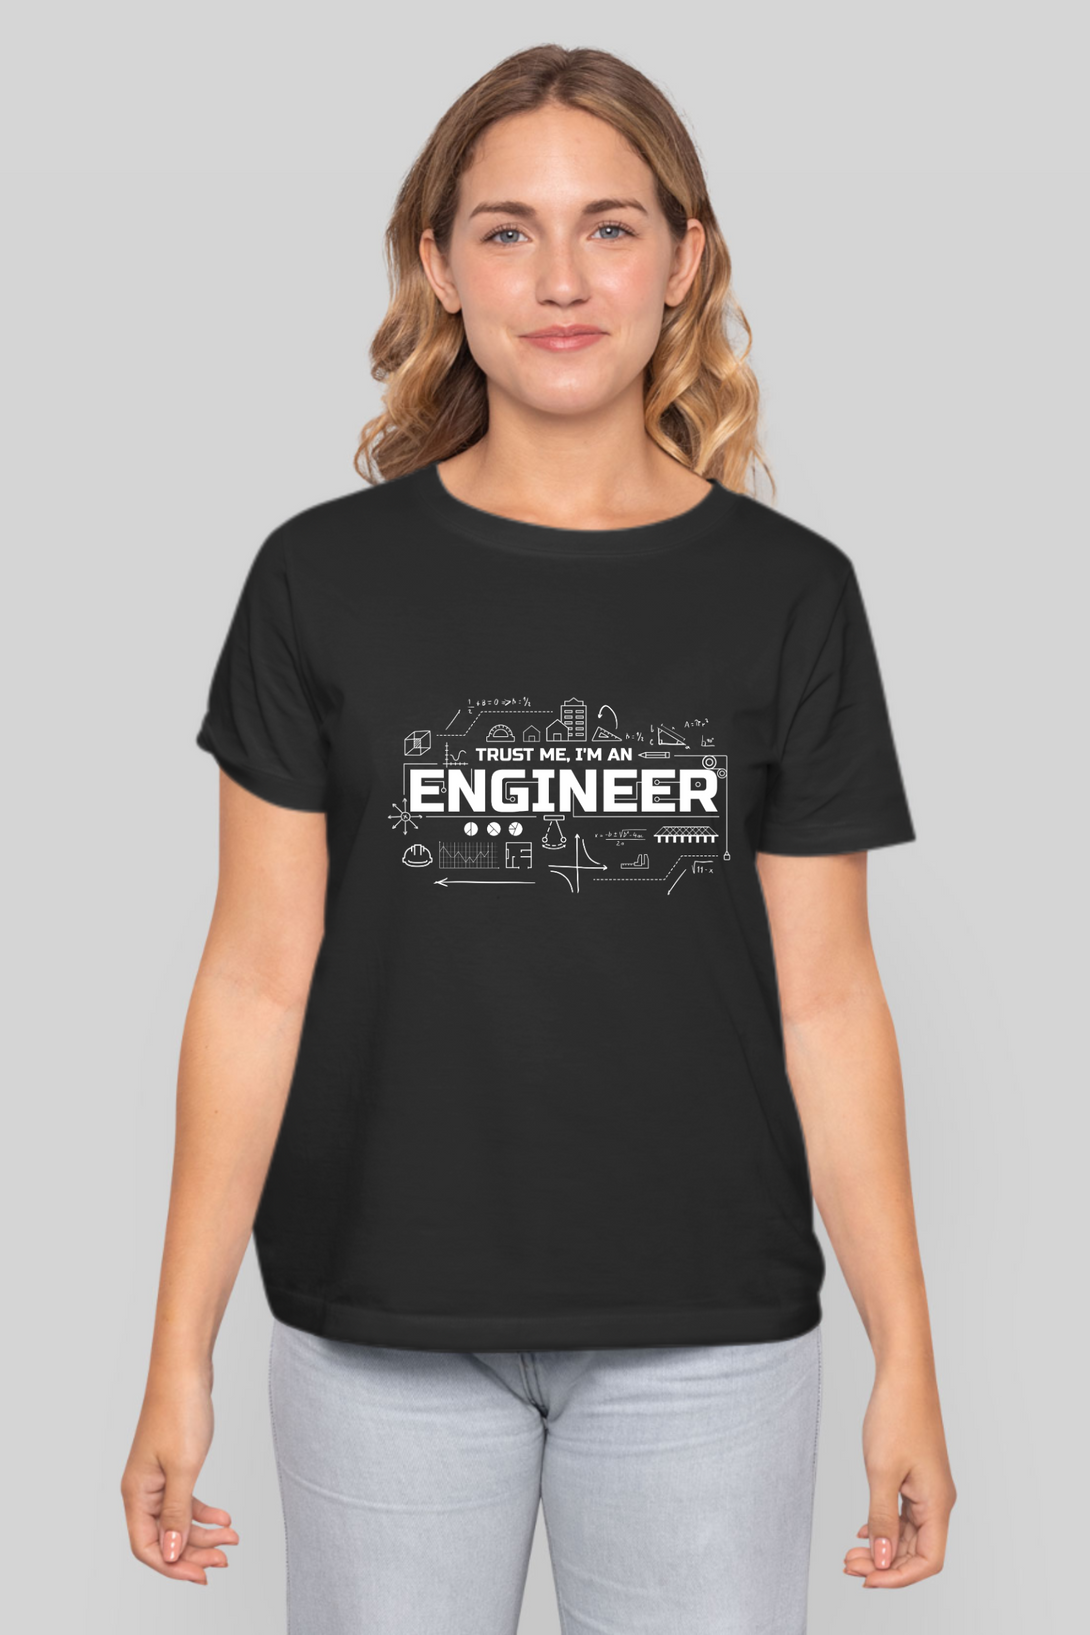 Trust Me, I'M An Engineer Printed T-Shirt For Women - WowWaves - 9